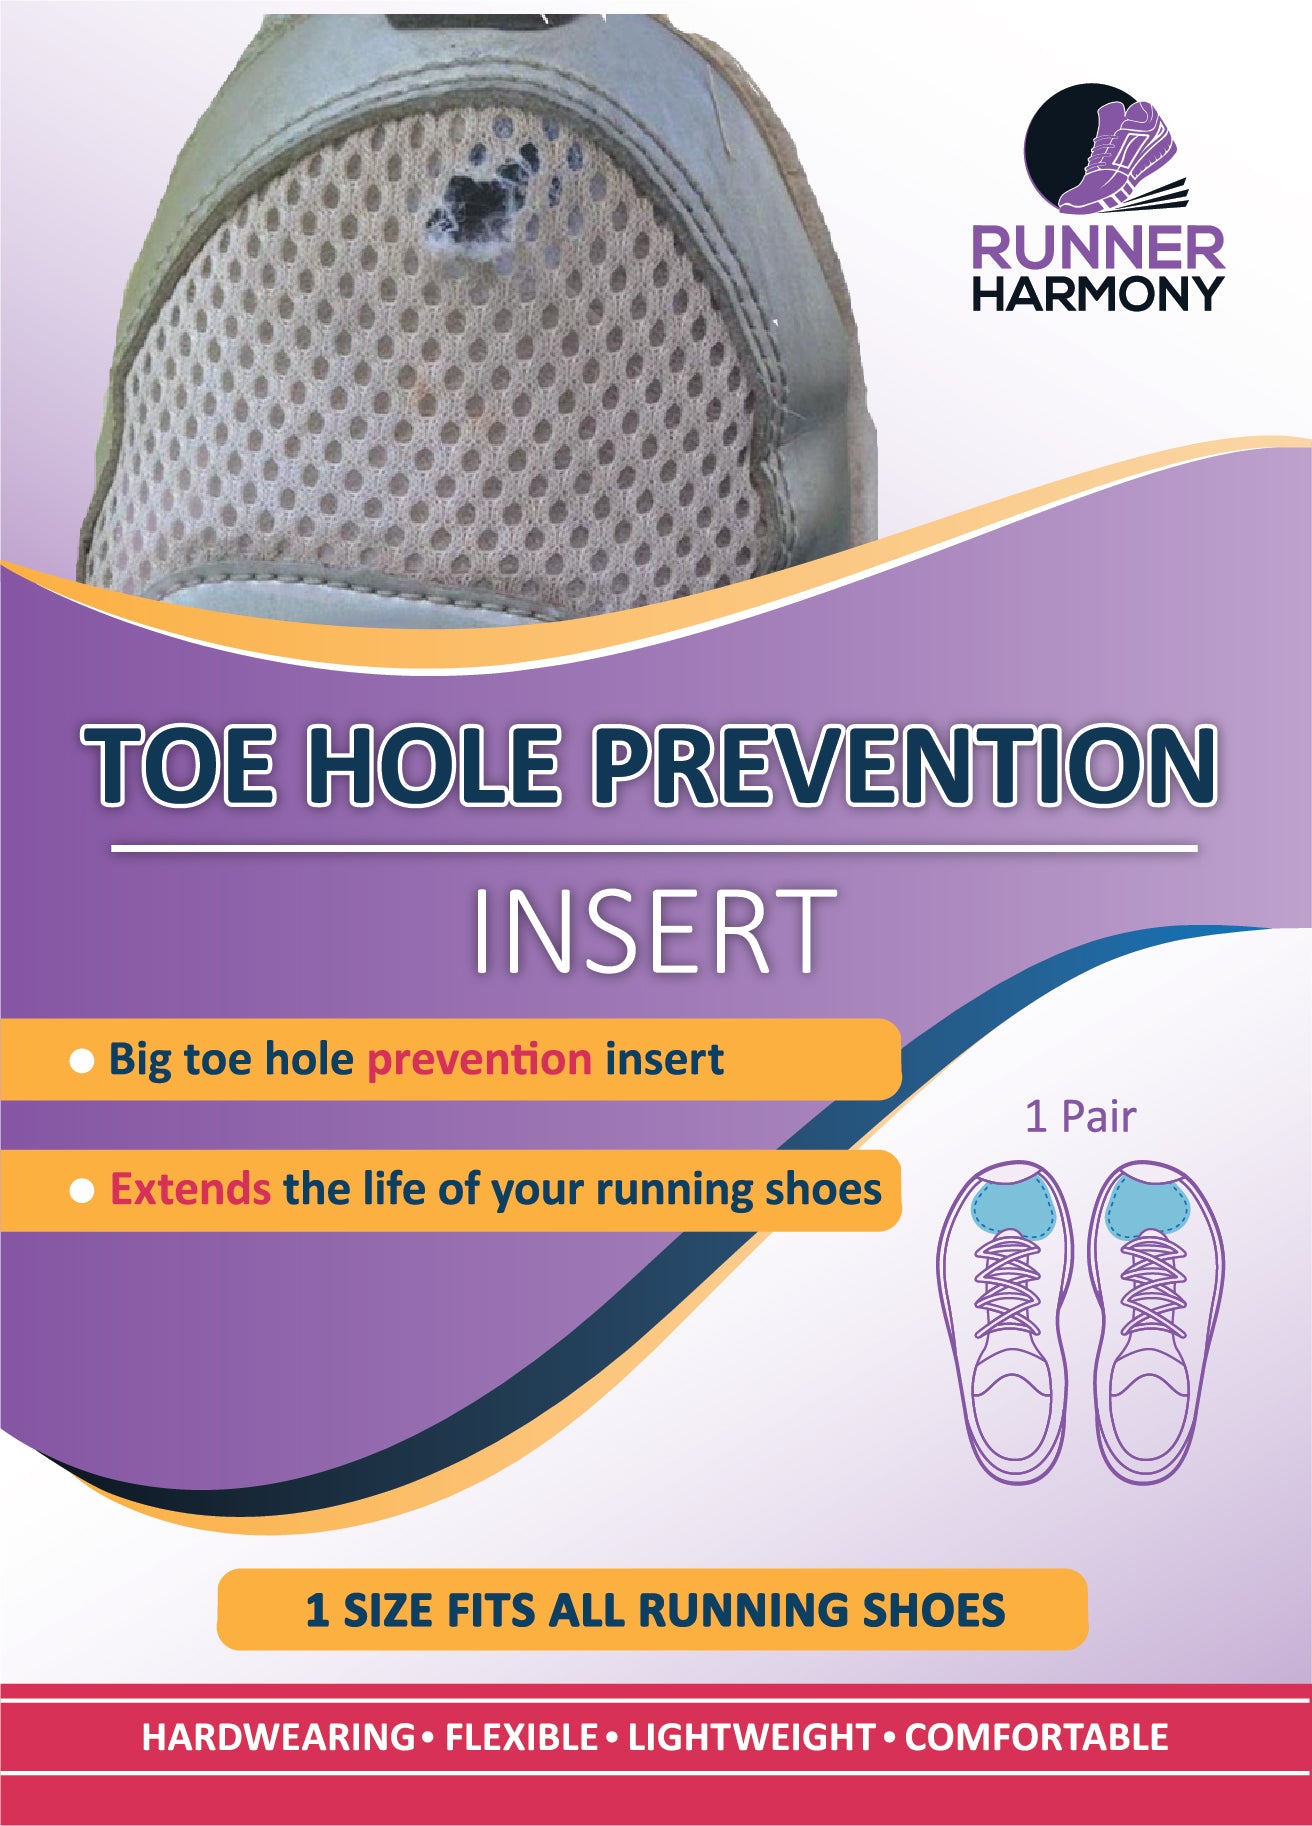 Toe Hole Prevention Insert